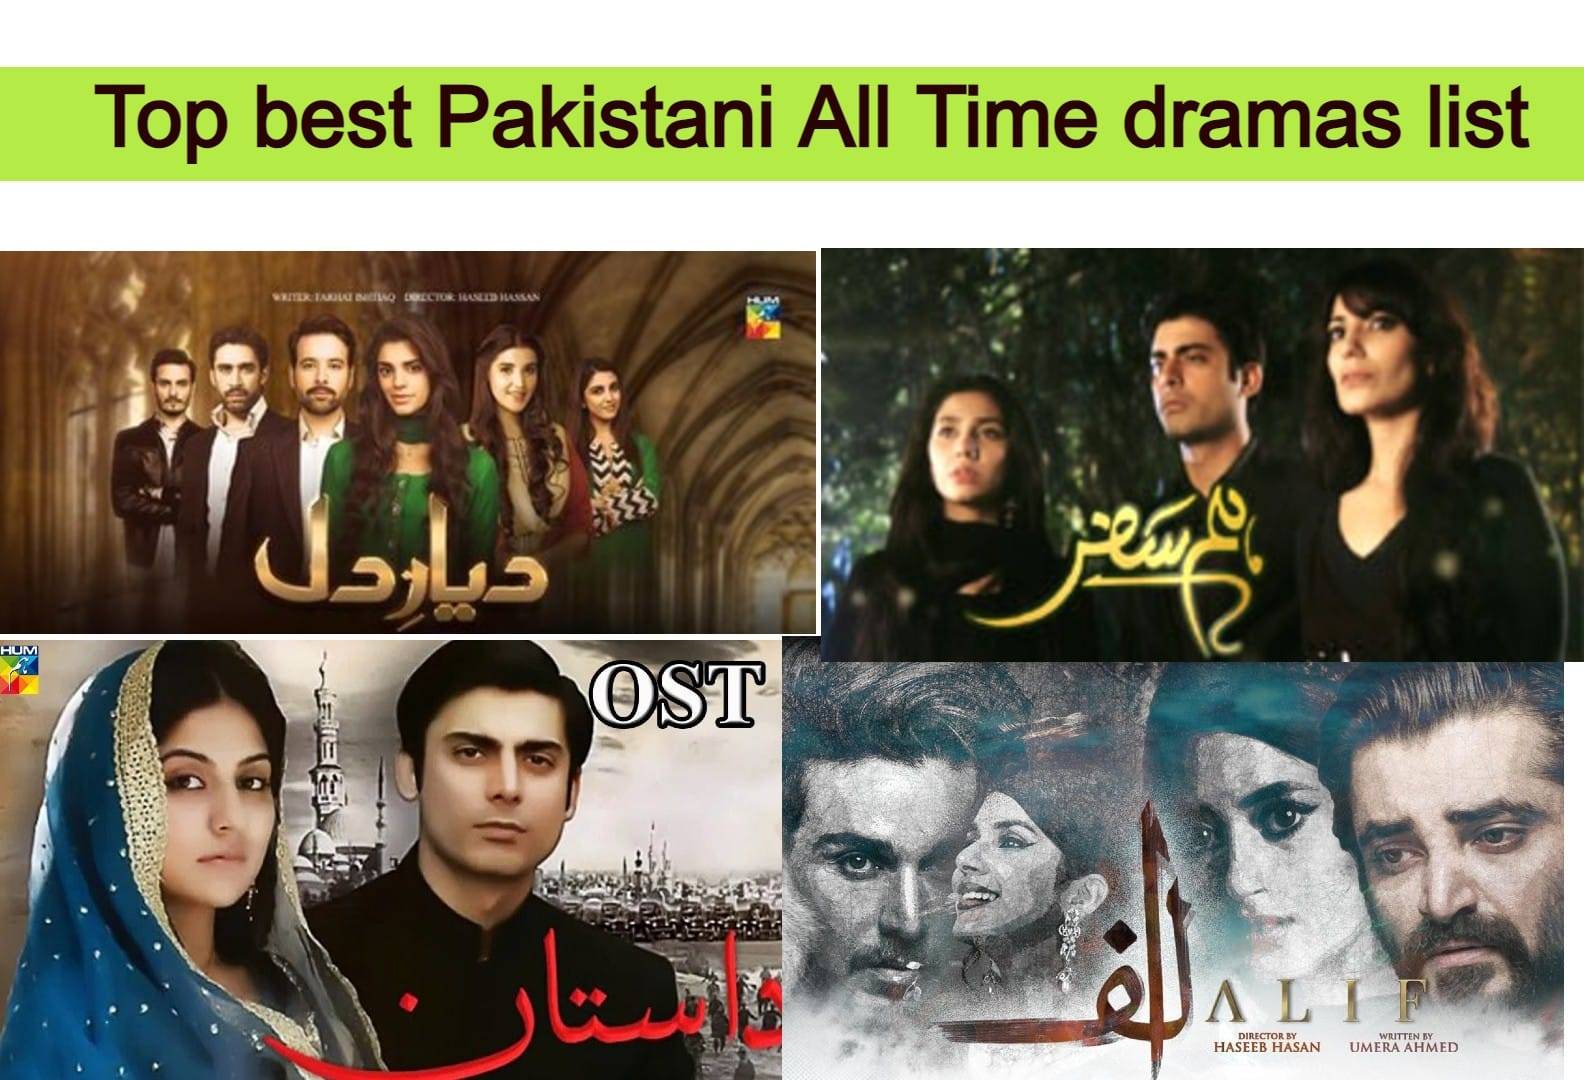 Top 10 best Pakistani All Time dramas list